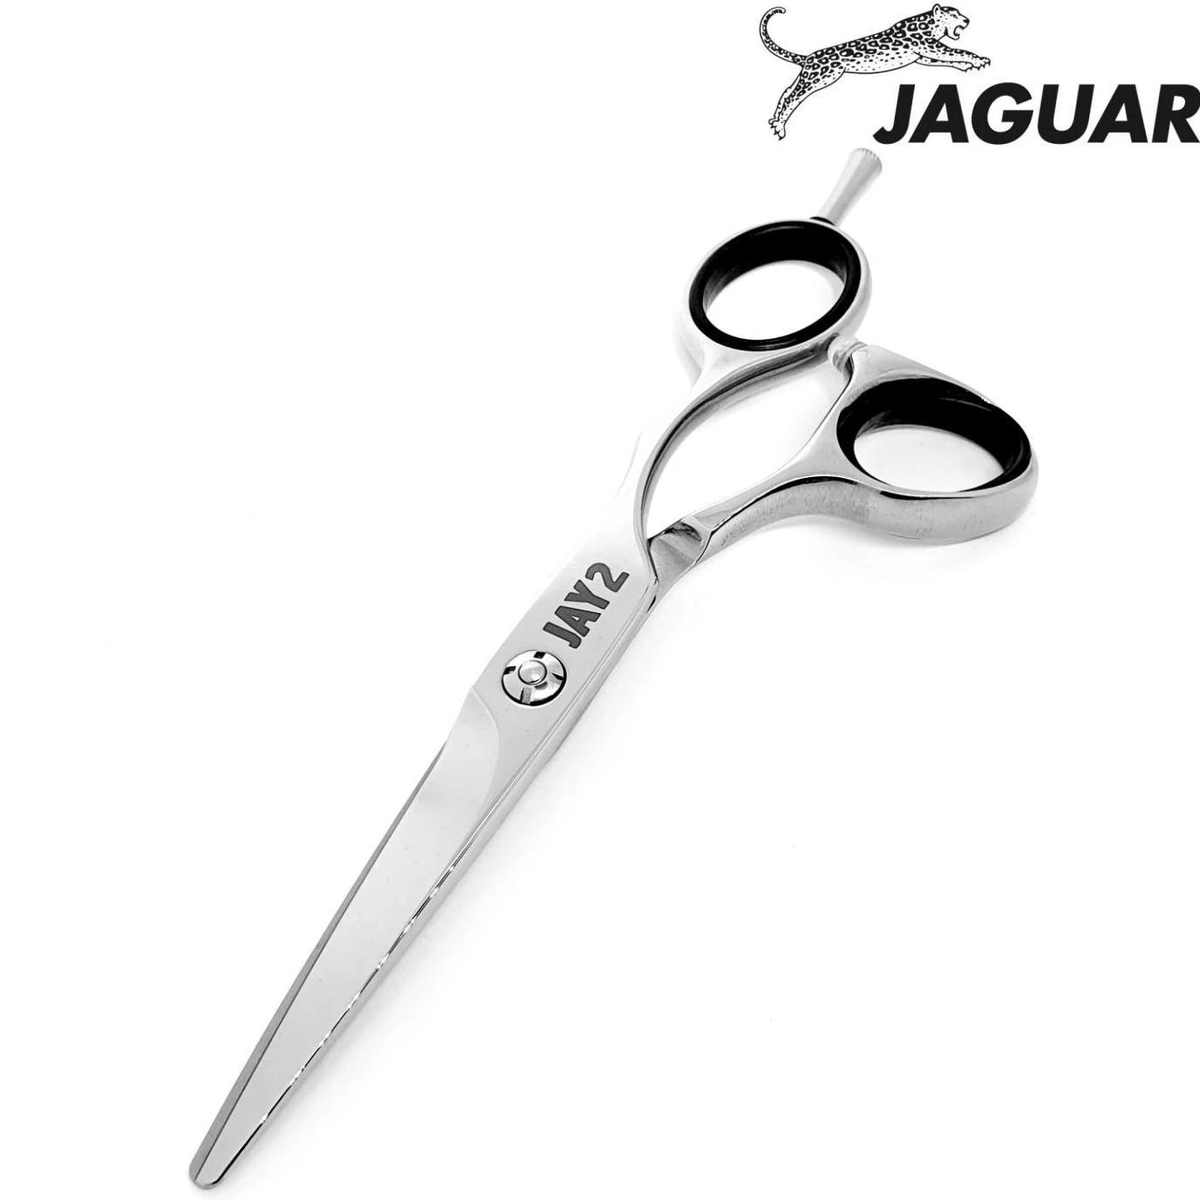 Jaguar Jay 2 Hair Cutting Scissor | Jay2 Shear